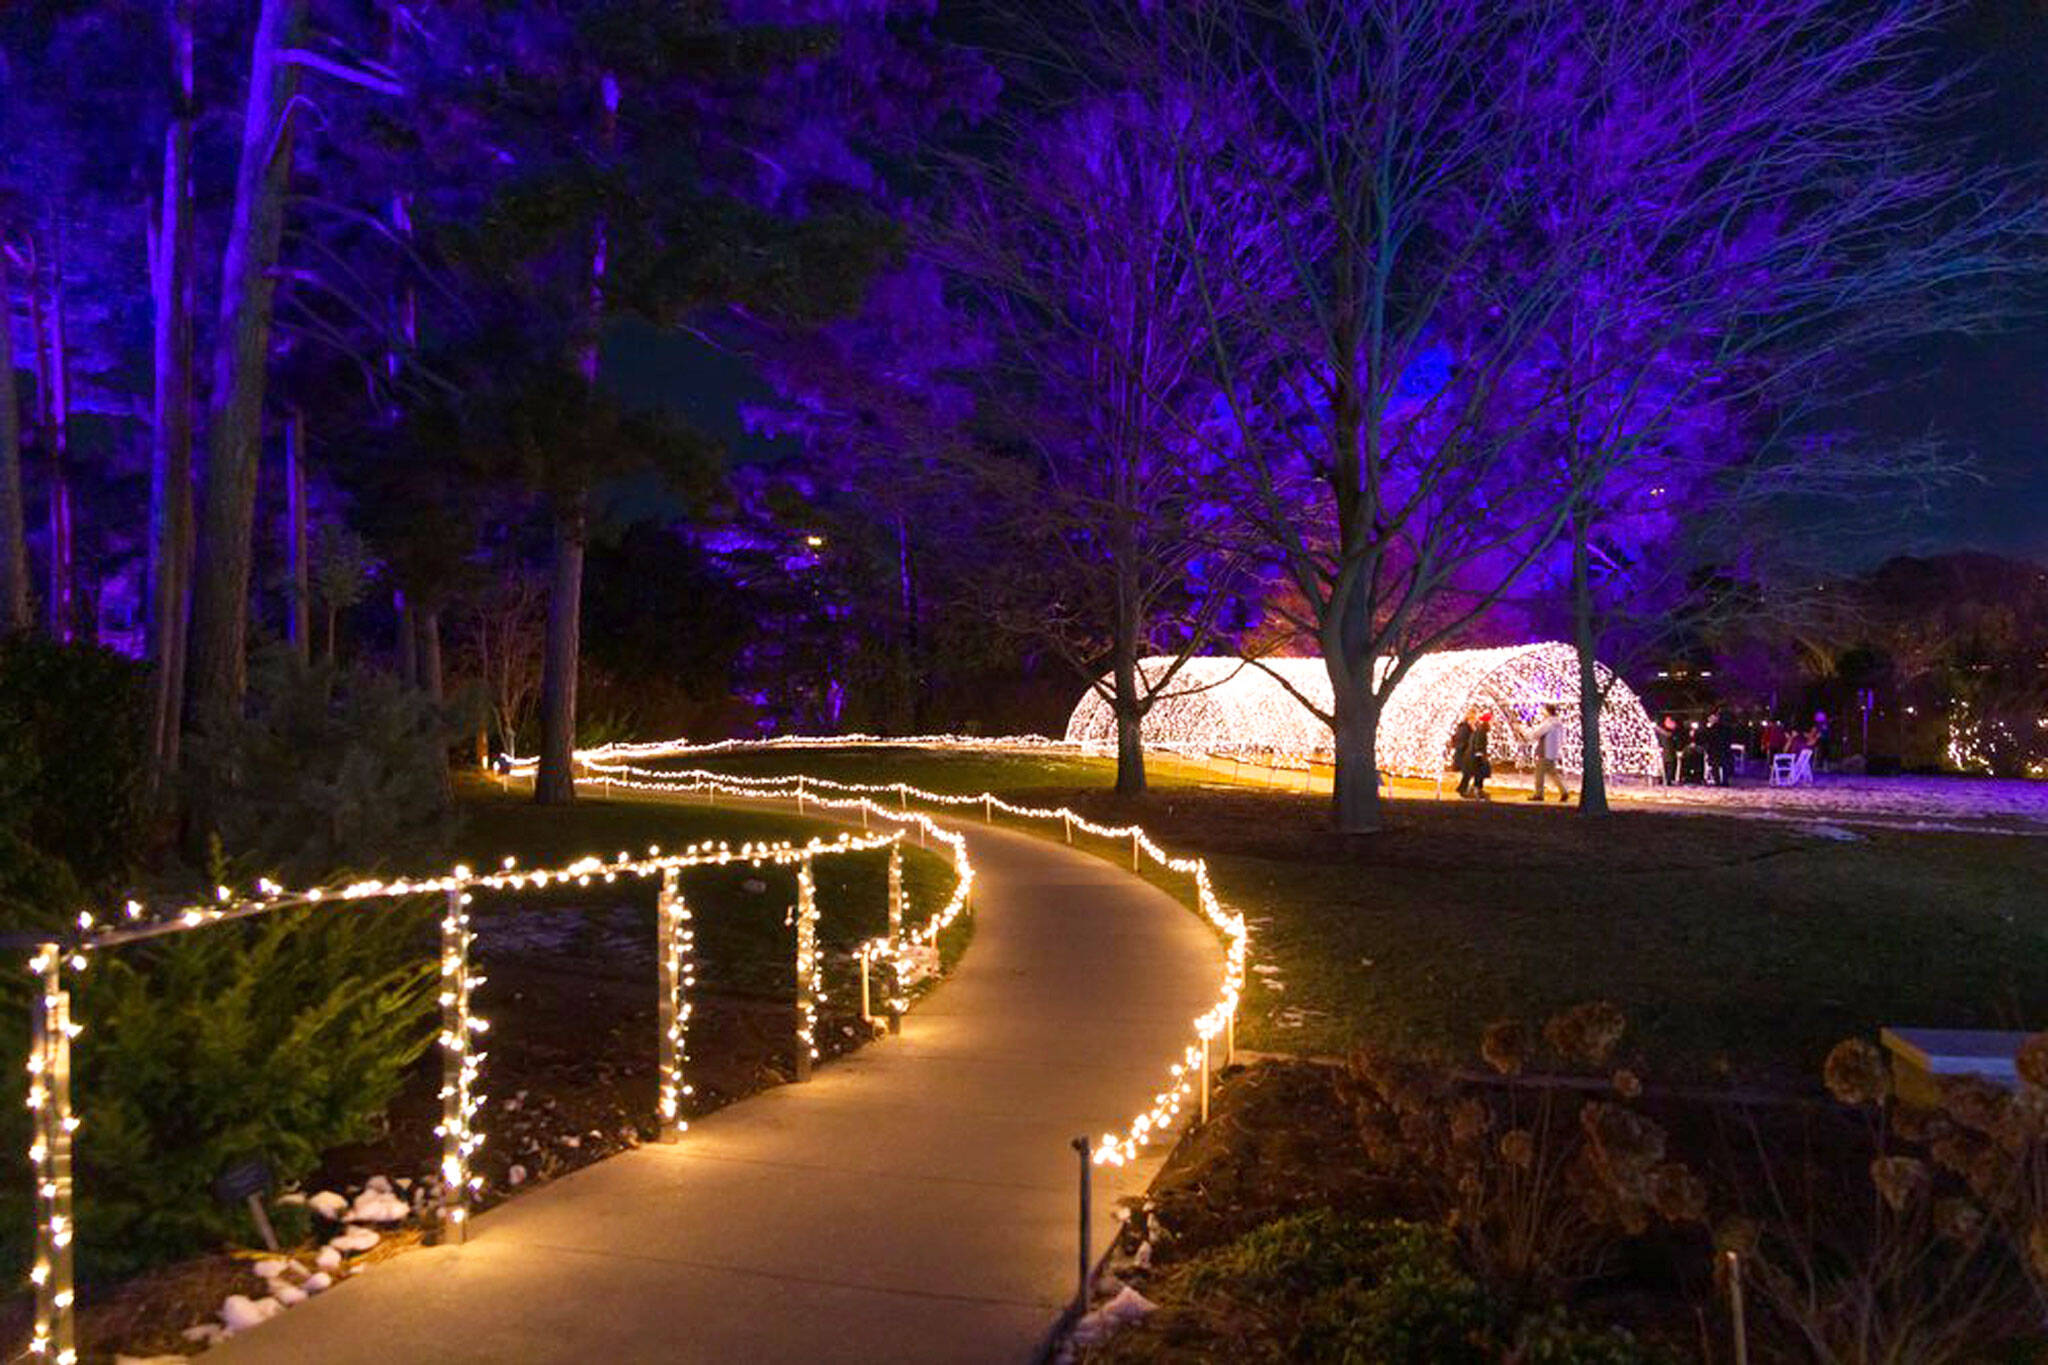 Enchanted winter wonderland with 1.5 km of lights opening near Toronto